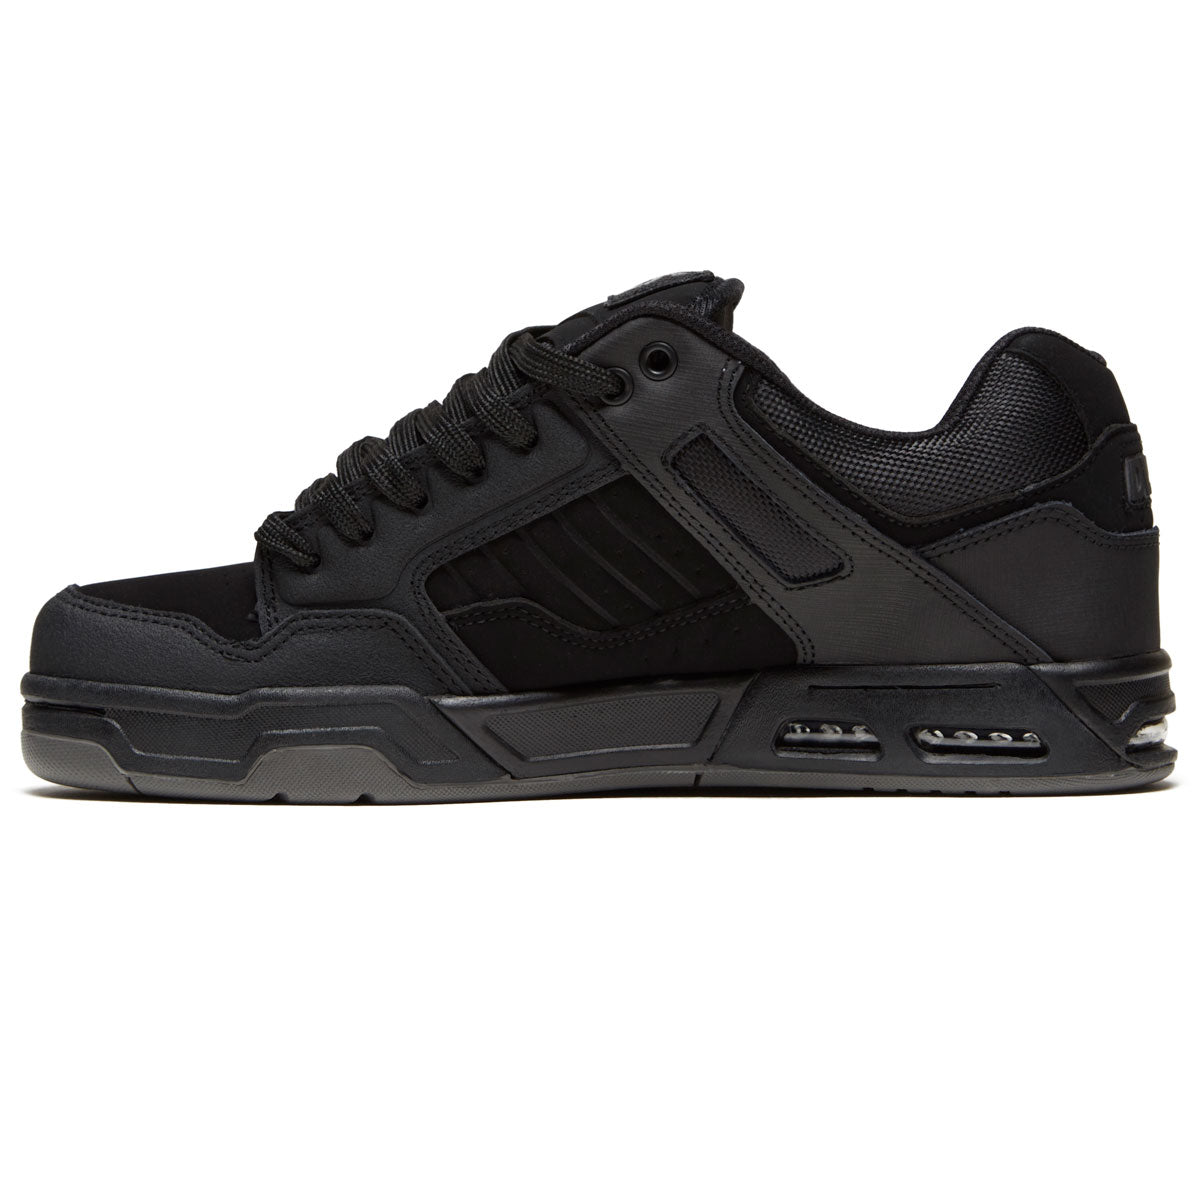 DVS Enduro Heir Shoes - Black/Black Leather image 2